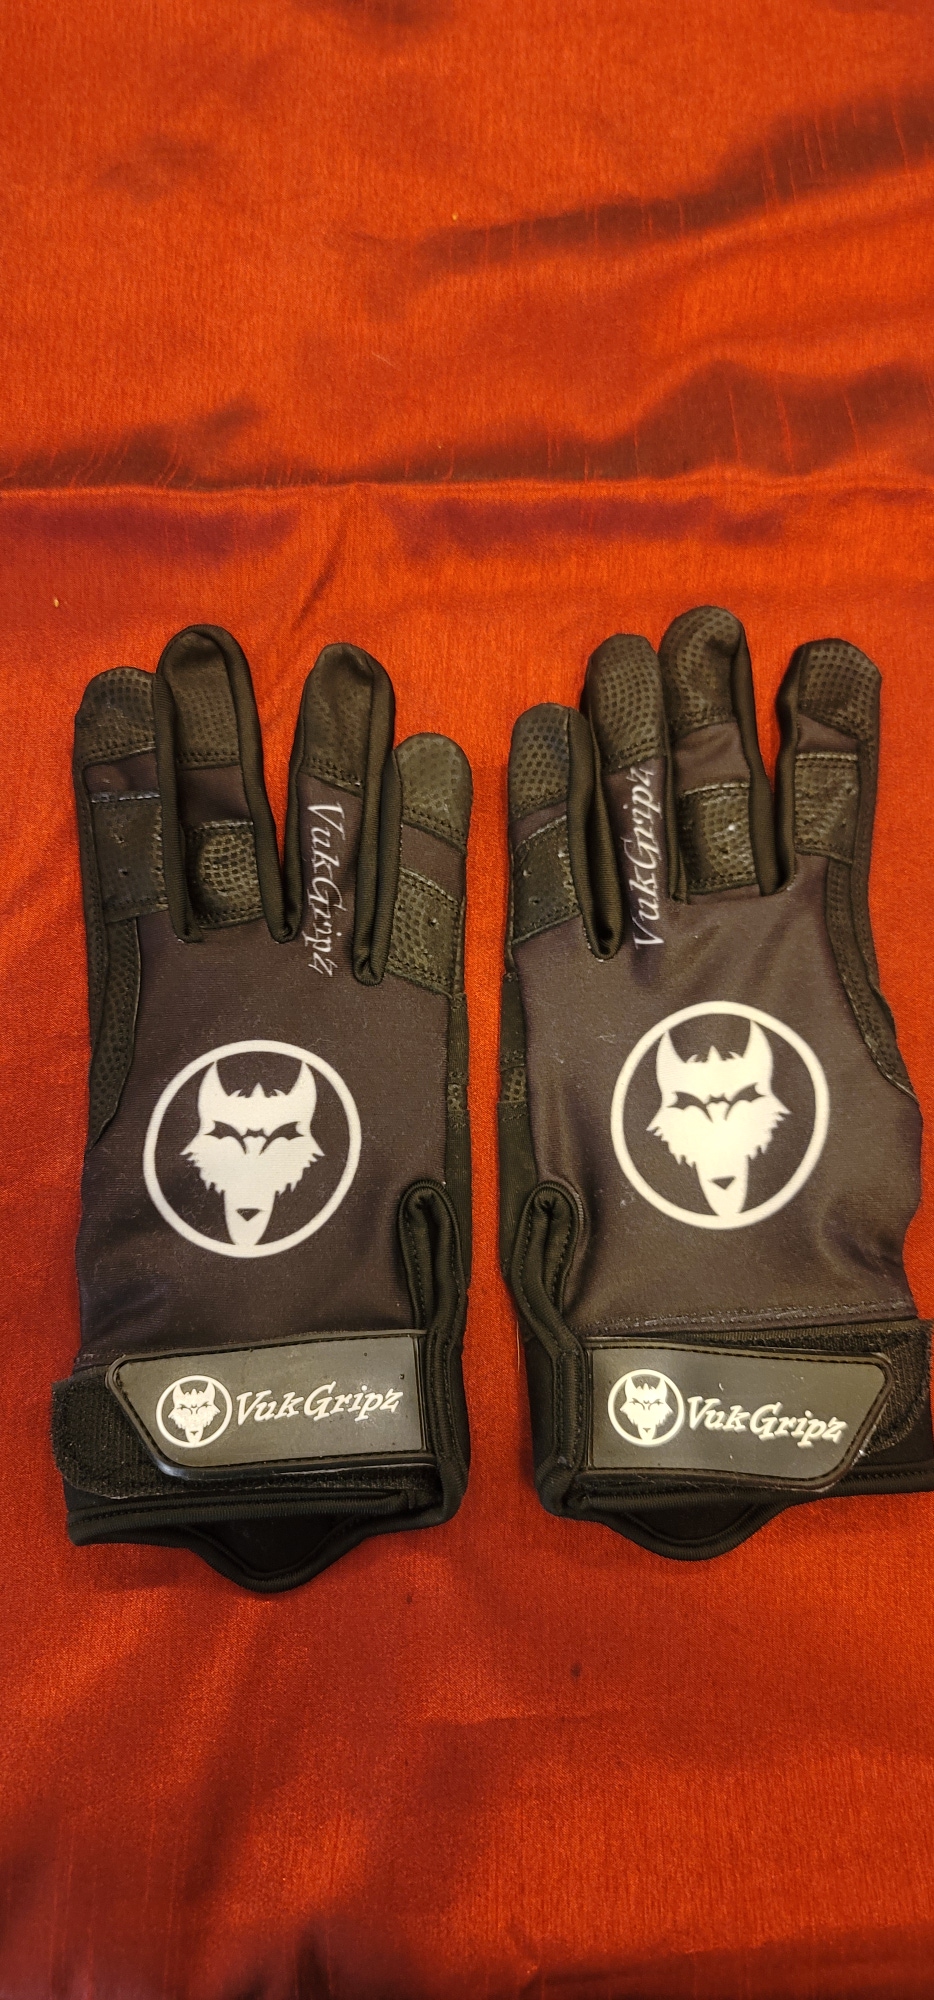 New Small Batting Gloves